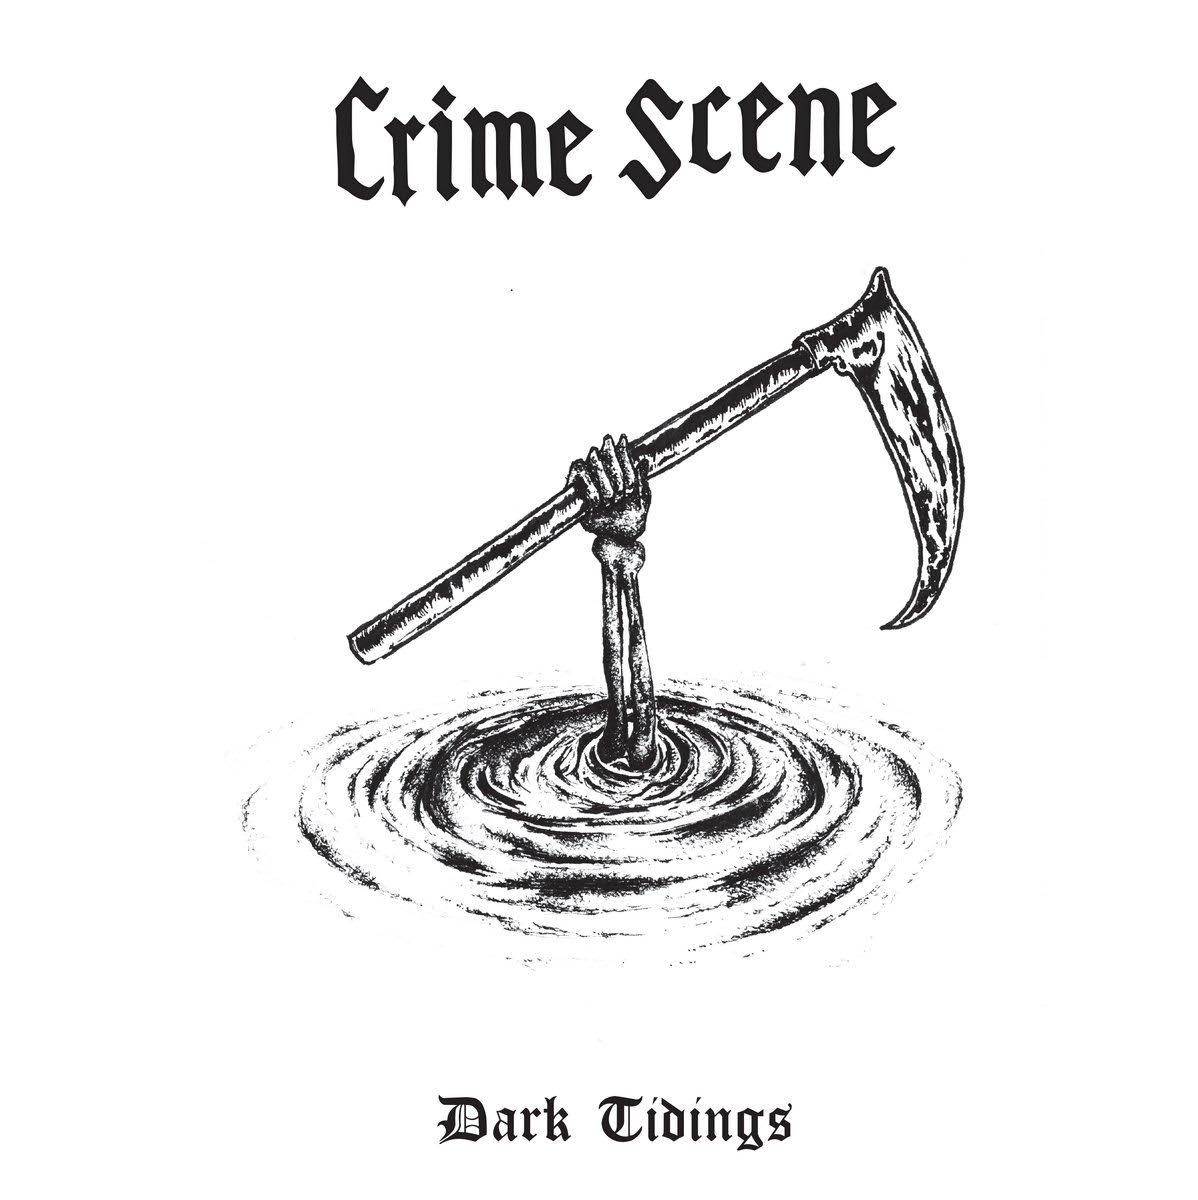 Crime Scene 